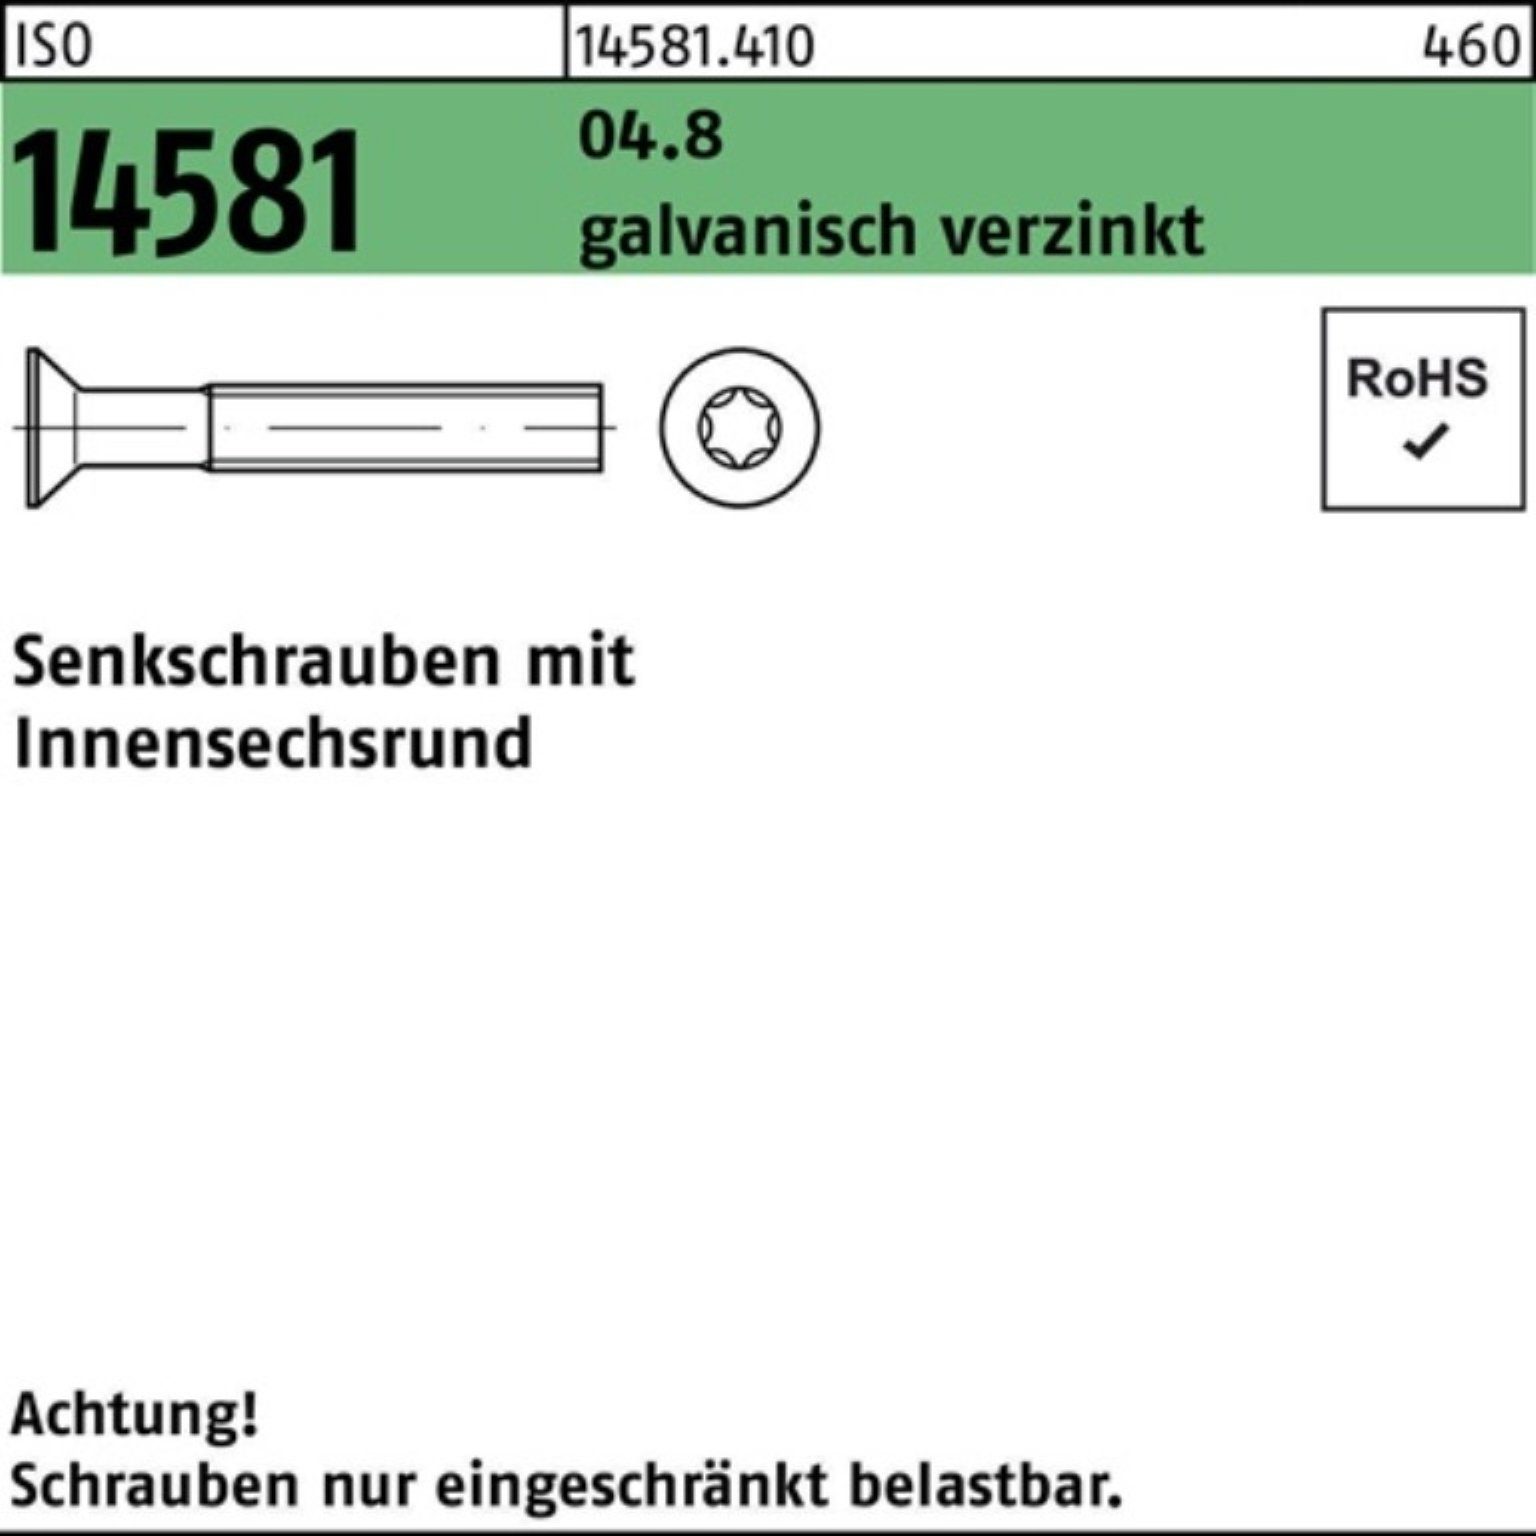 Reyher Senkschraube galv.verz. Pack Senkschraube 04.8 ISR 2000er ISO 14581 2000St M5x8 T25